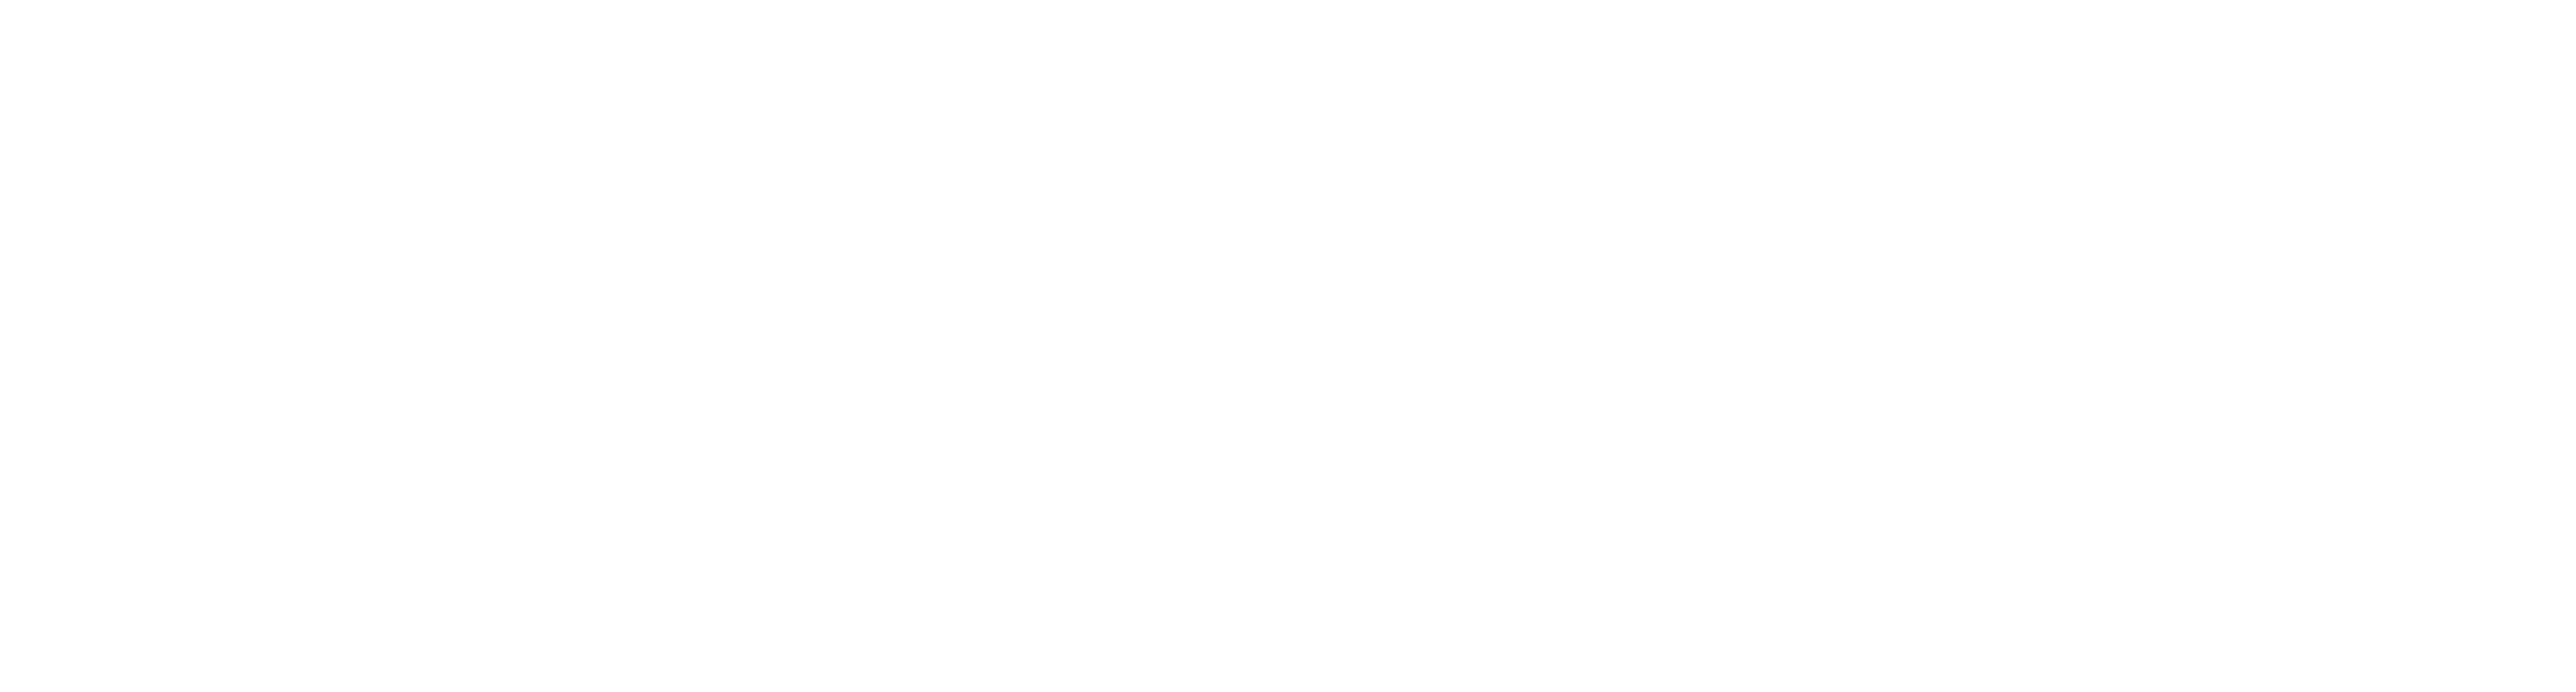 Enterprise Homecare